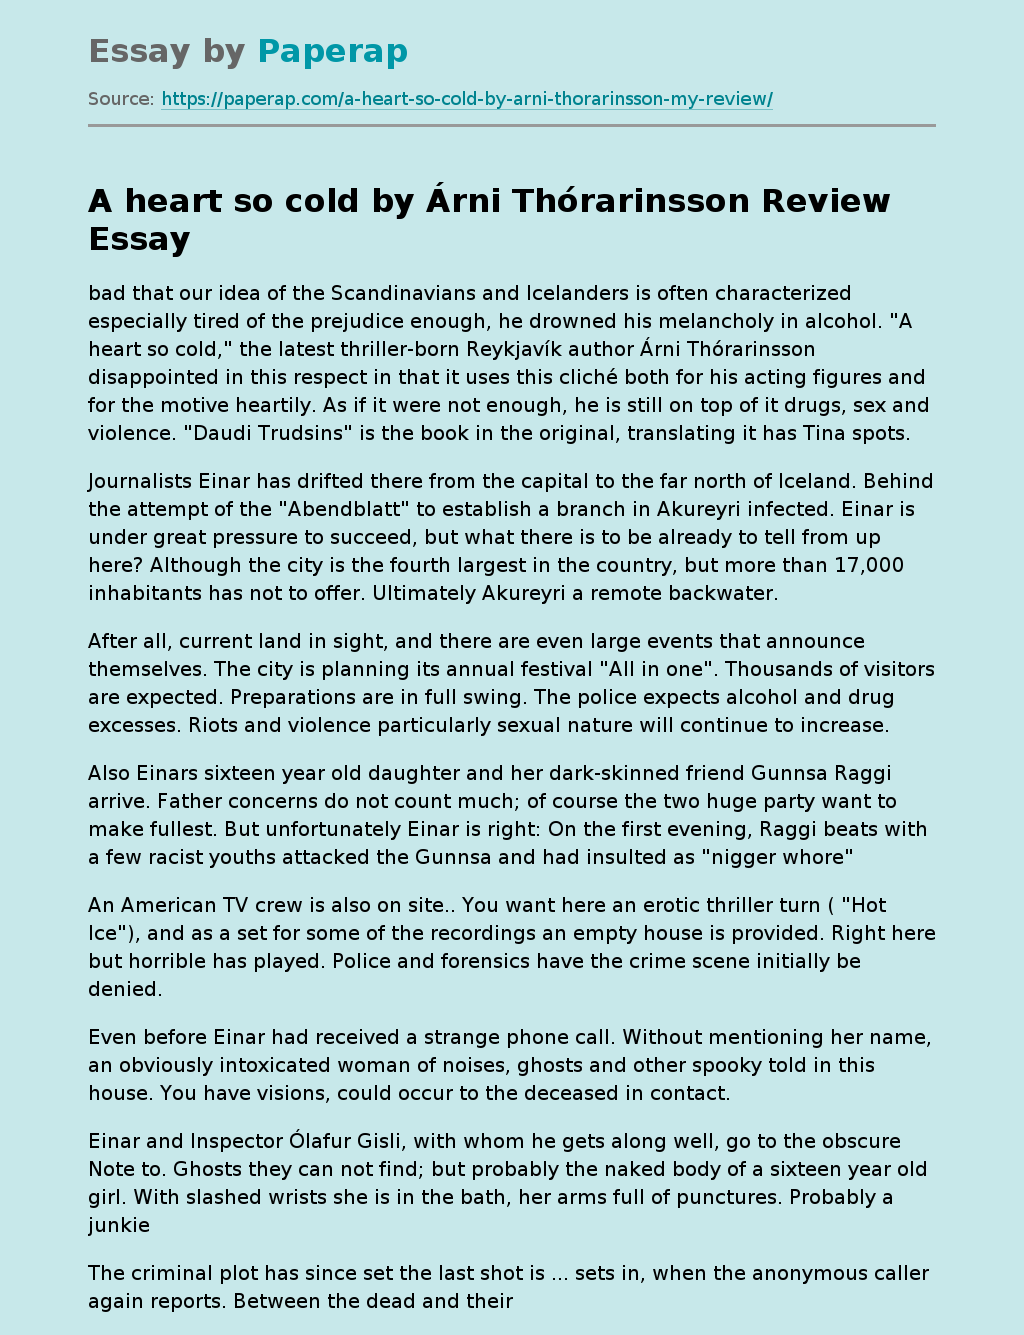 A Heart so Cold by Árni Thórarinsson Review